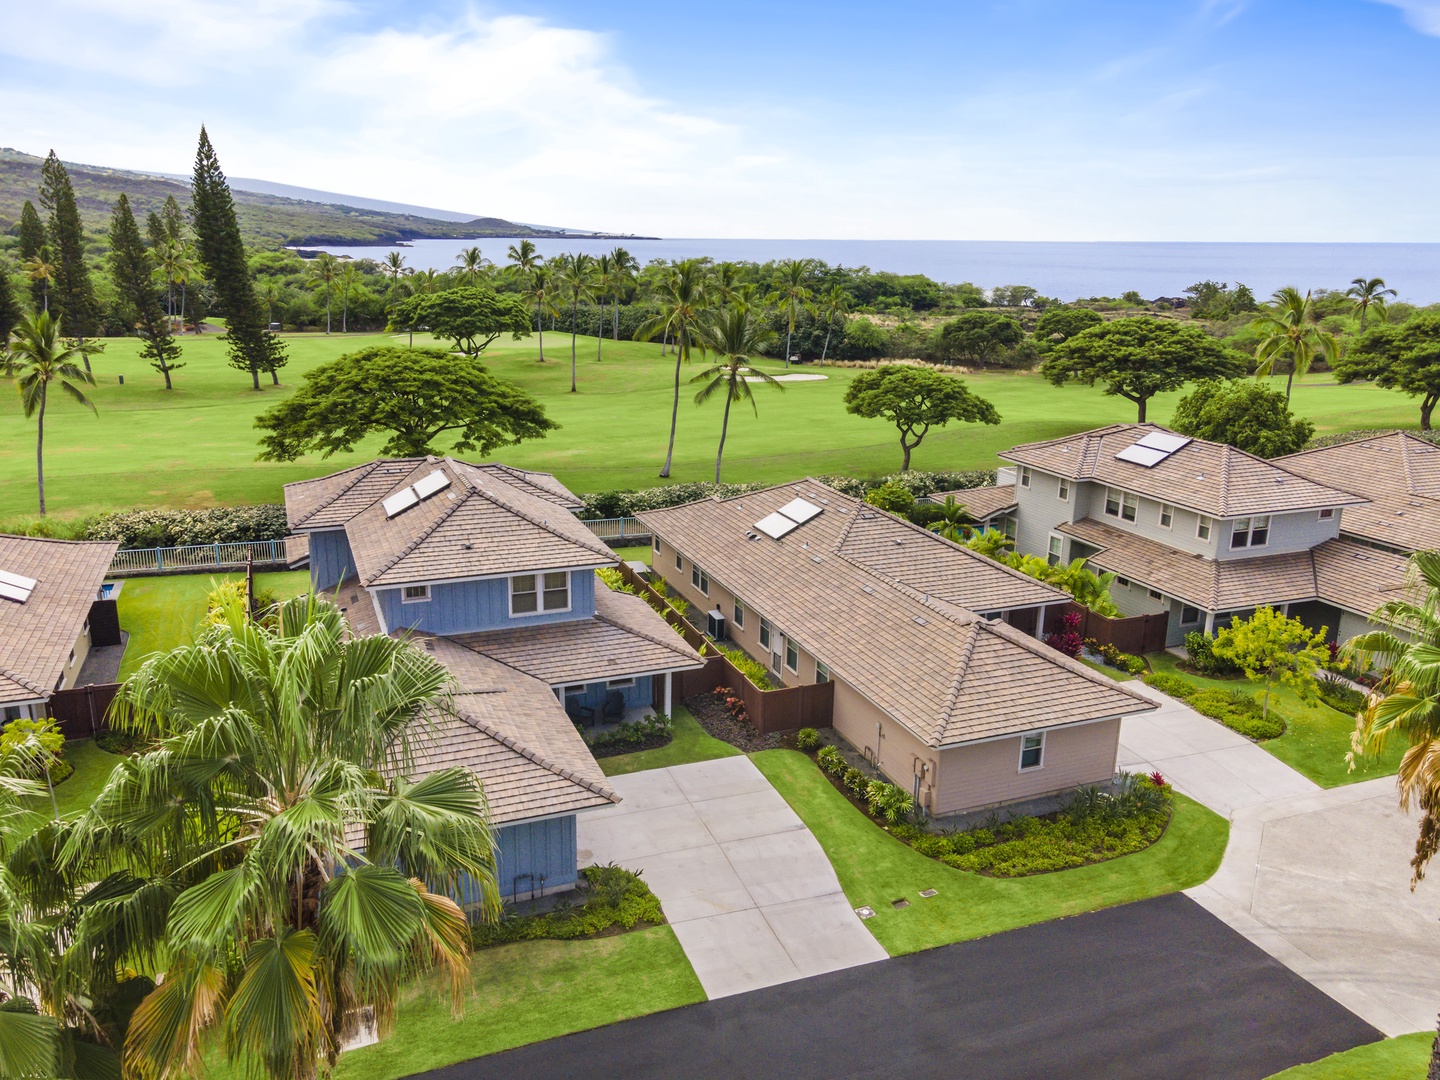 Kailua Kona Vacation Rentals, Holua Kai #9 - Aerials showcasing the home and proximity to the Ocean!